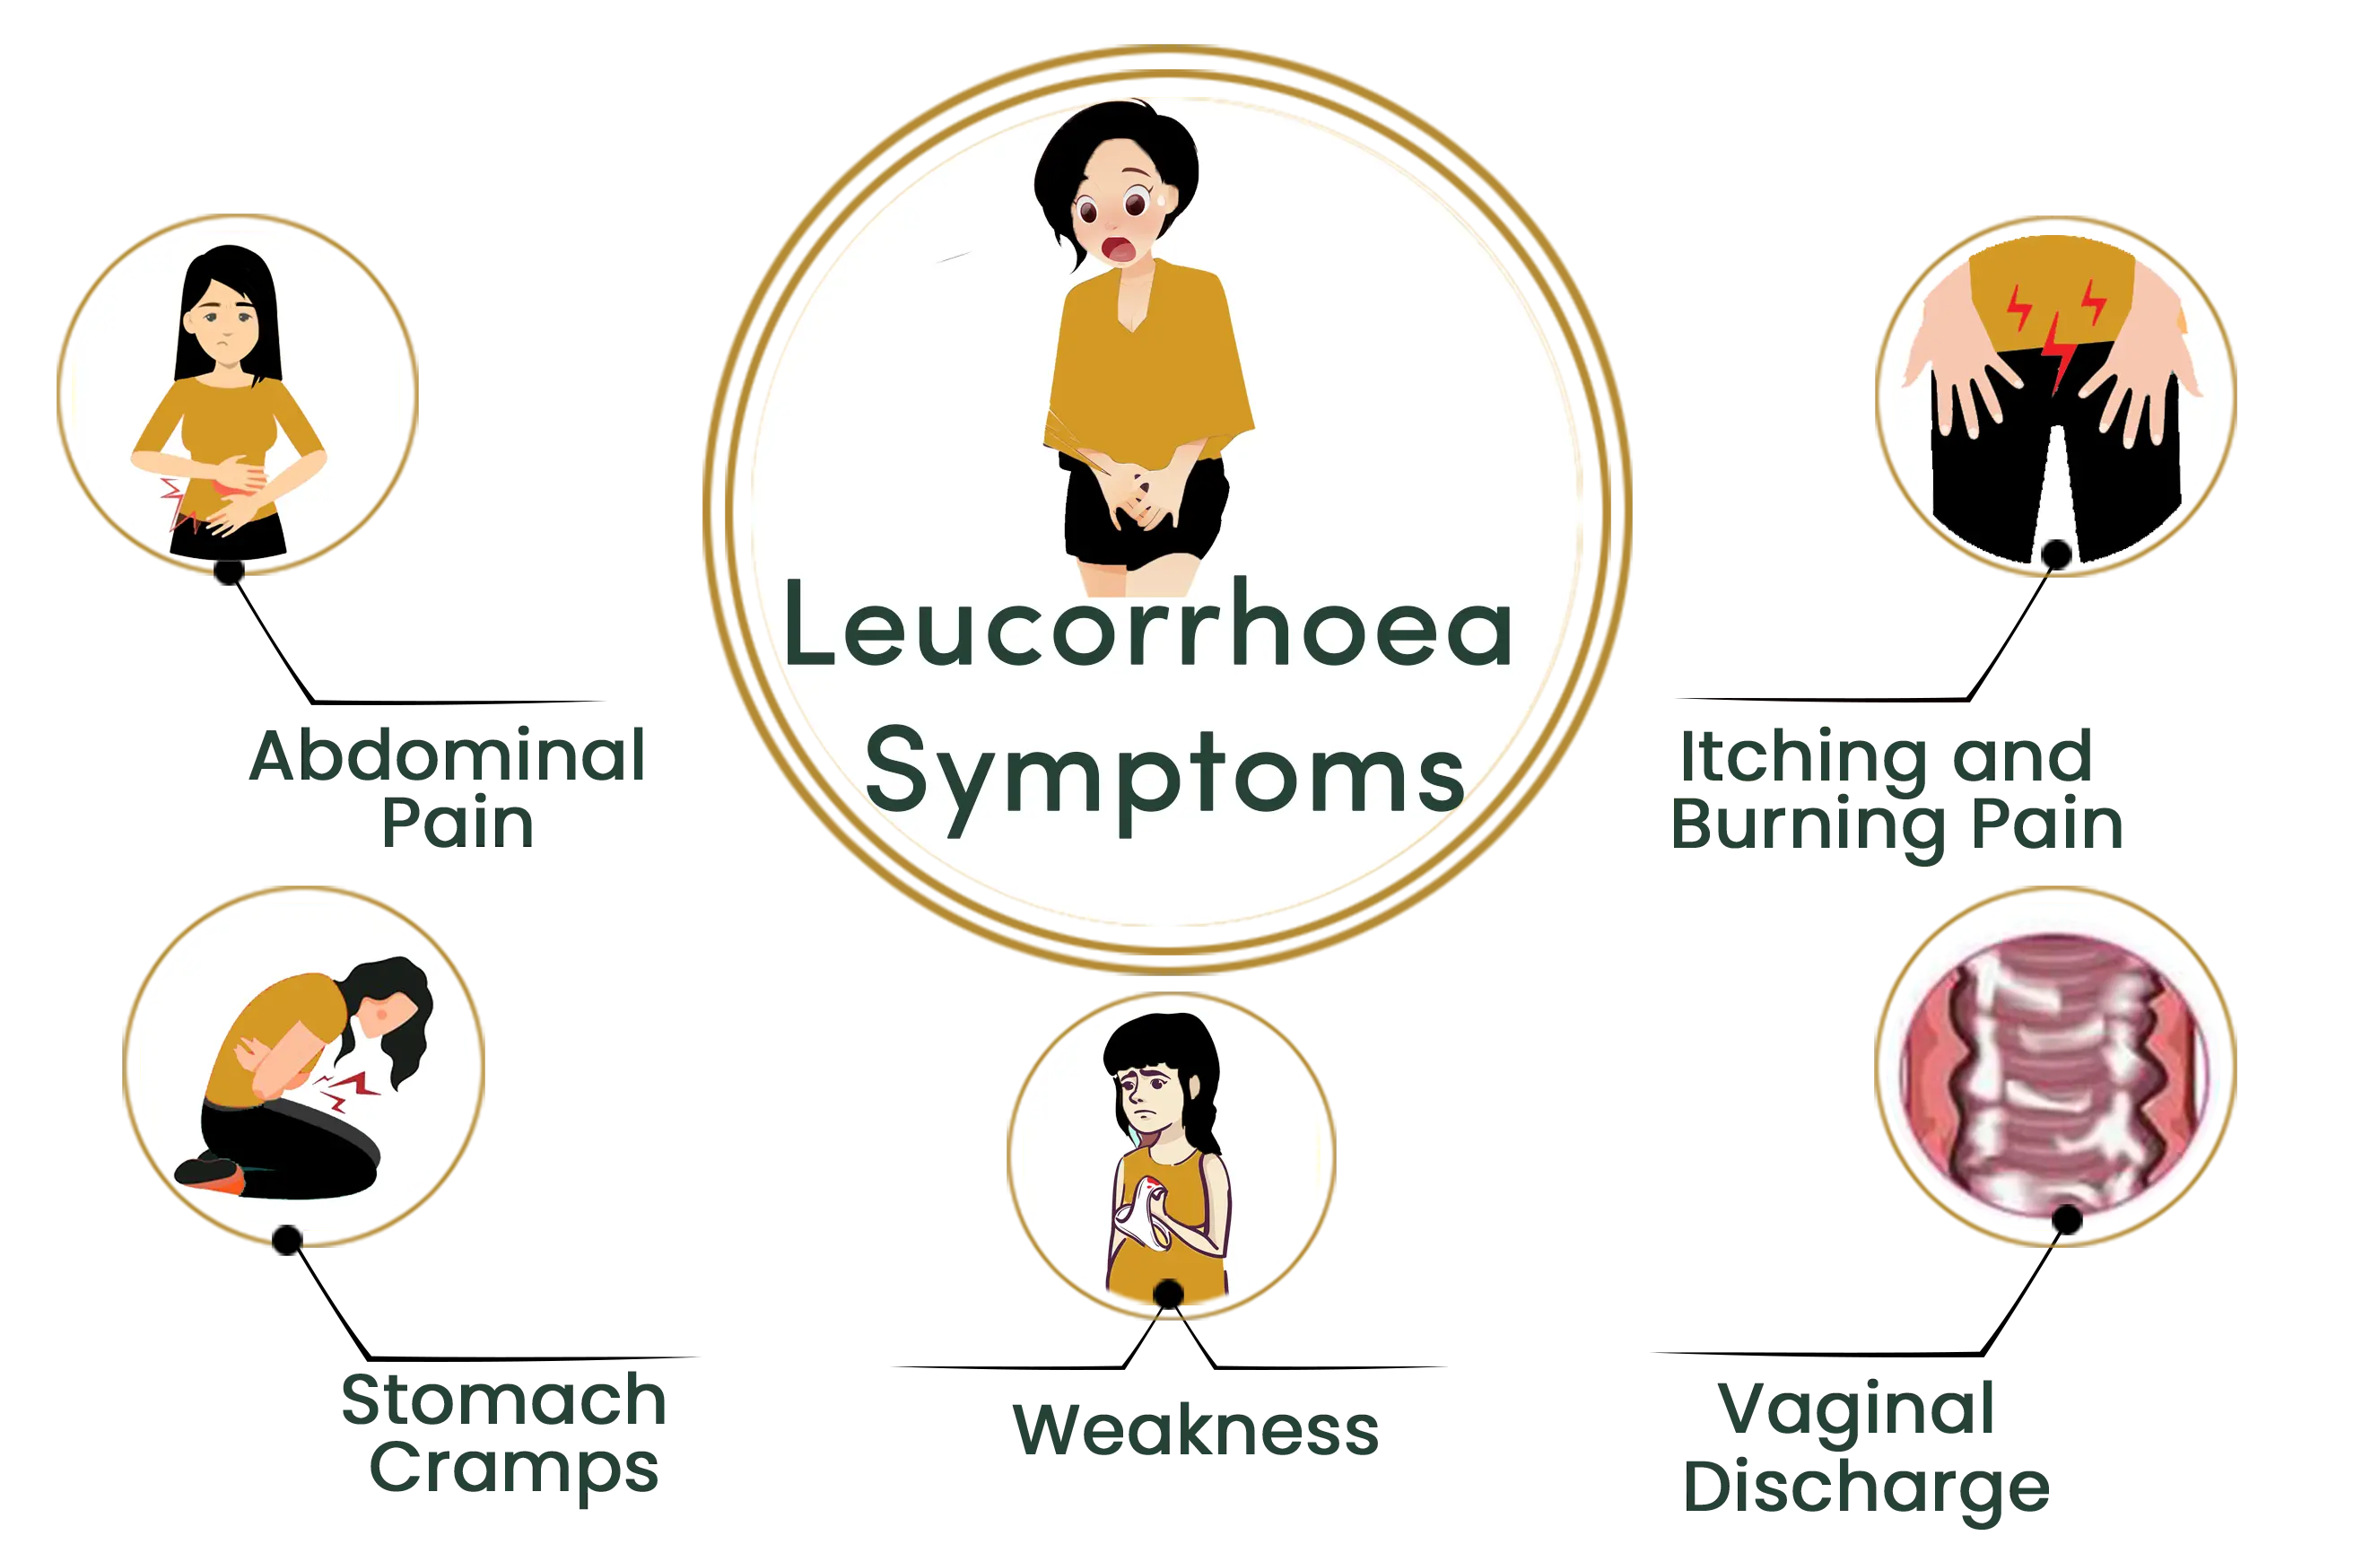 Leucorrhoea symptoms